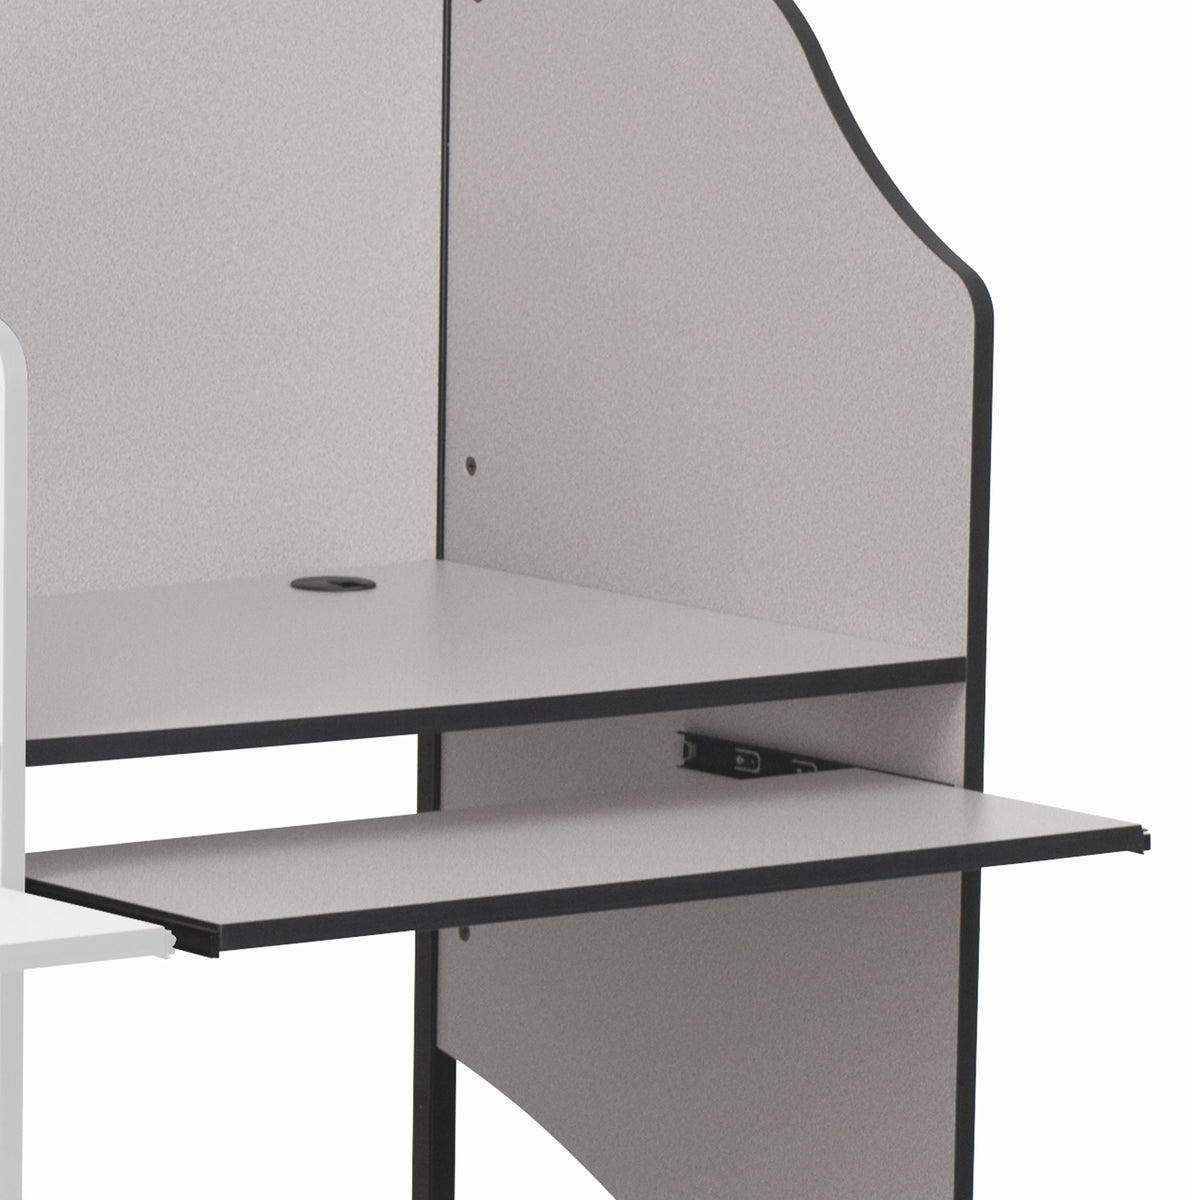 Nebula Grey |#| Add-On Study Carrel in Nebula Grey Finish - School Furniture - Computer Carrel